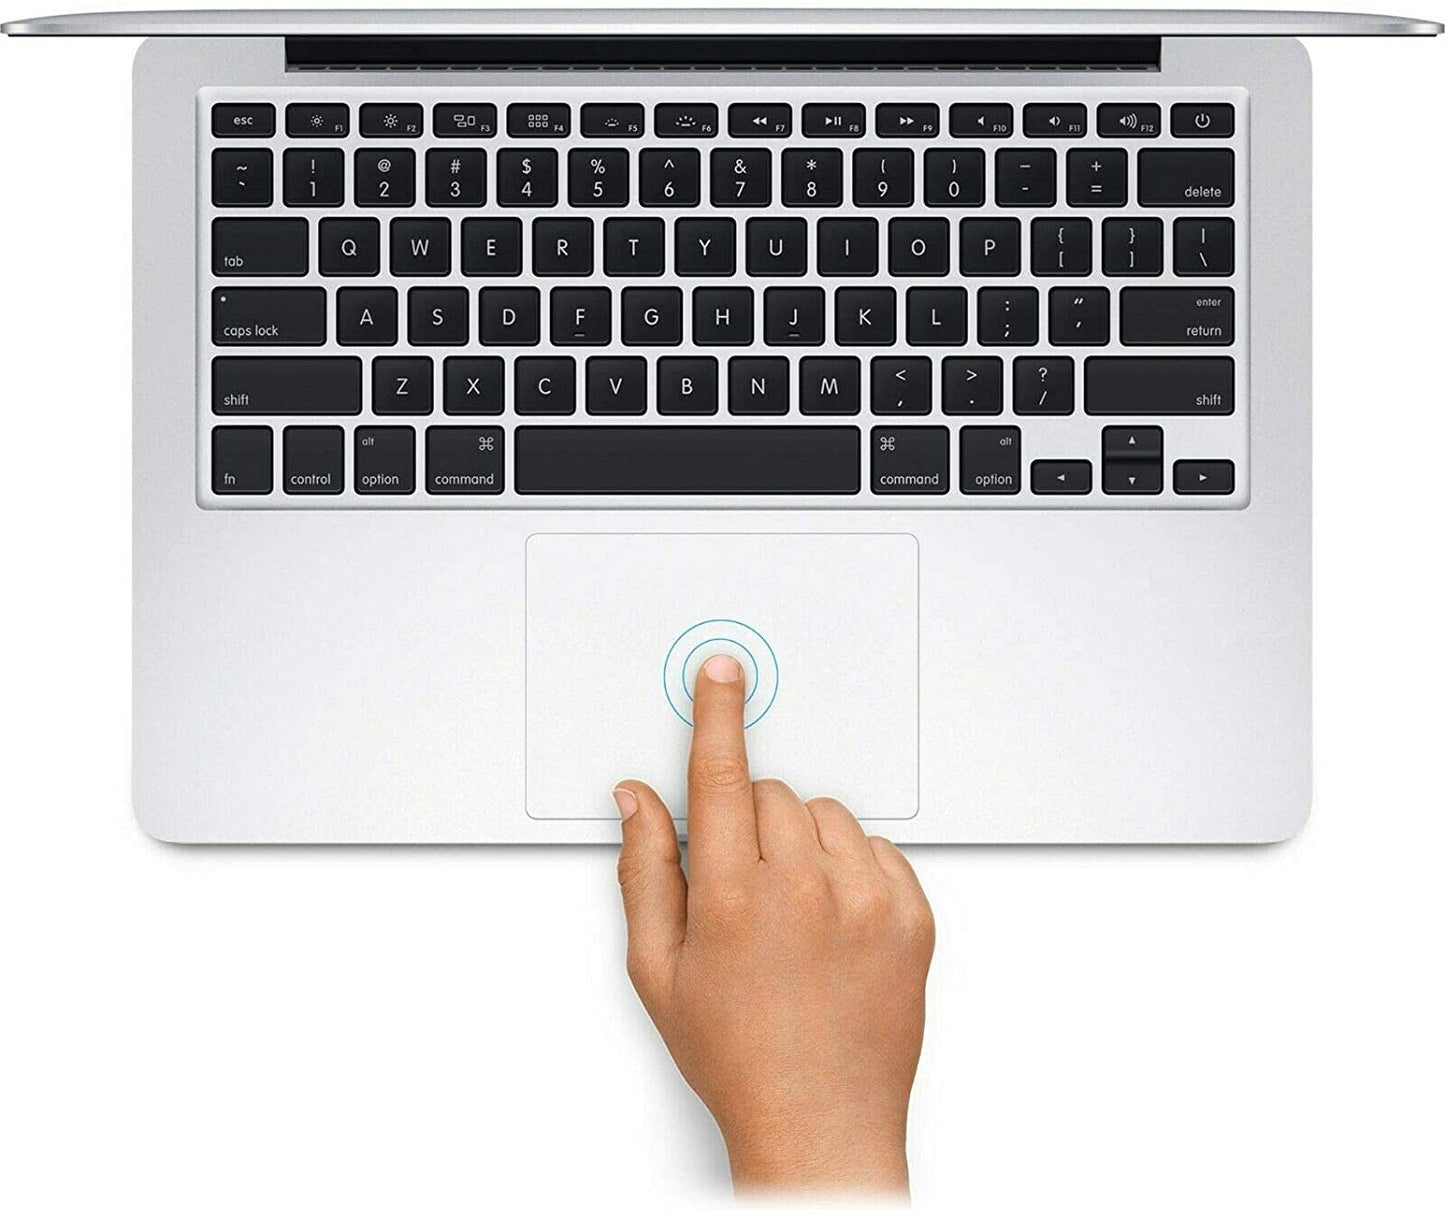 Apple MacBook Pro 2014| A1398 ME294LL/A |Corei7 |16GB RAM |256GB SSD